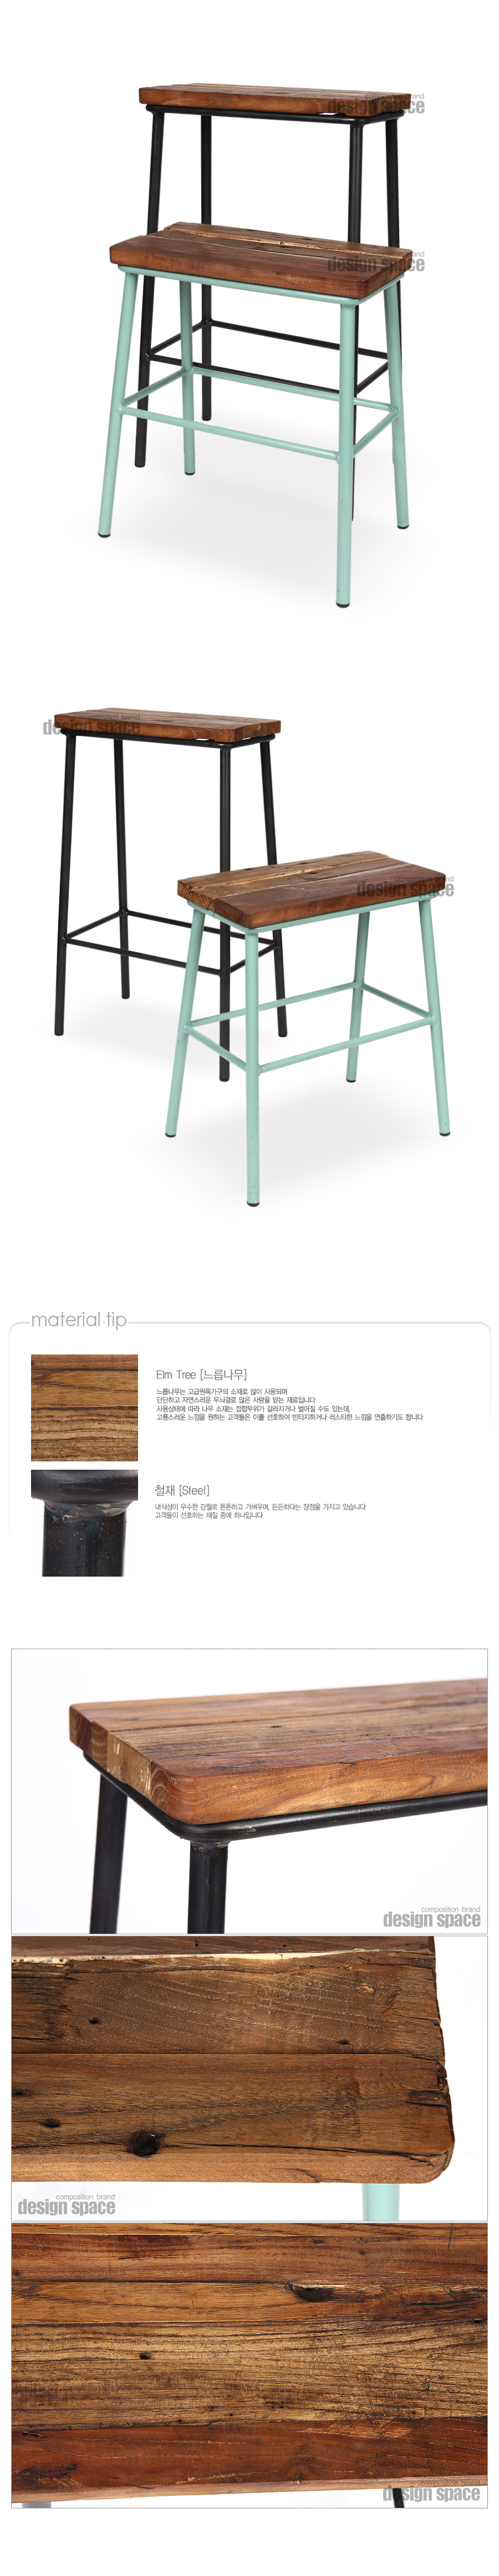 hiko-stool_03.jpg